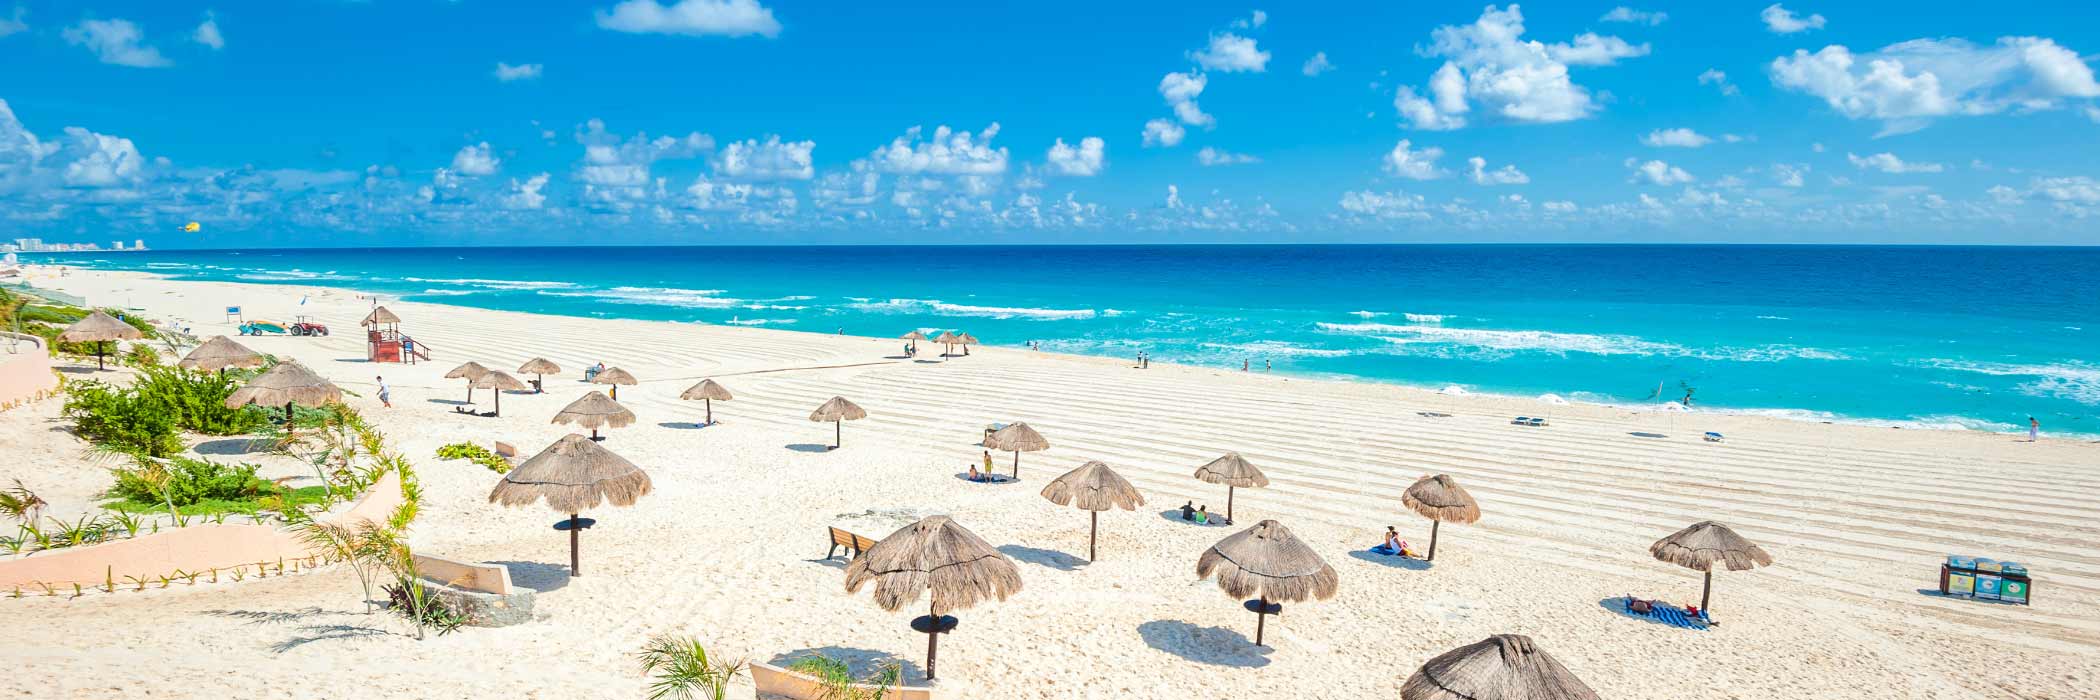 Cancun - TUI Mexico Holidays